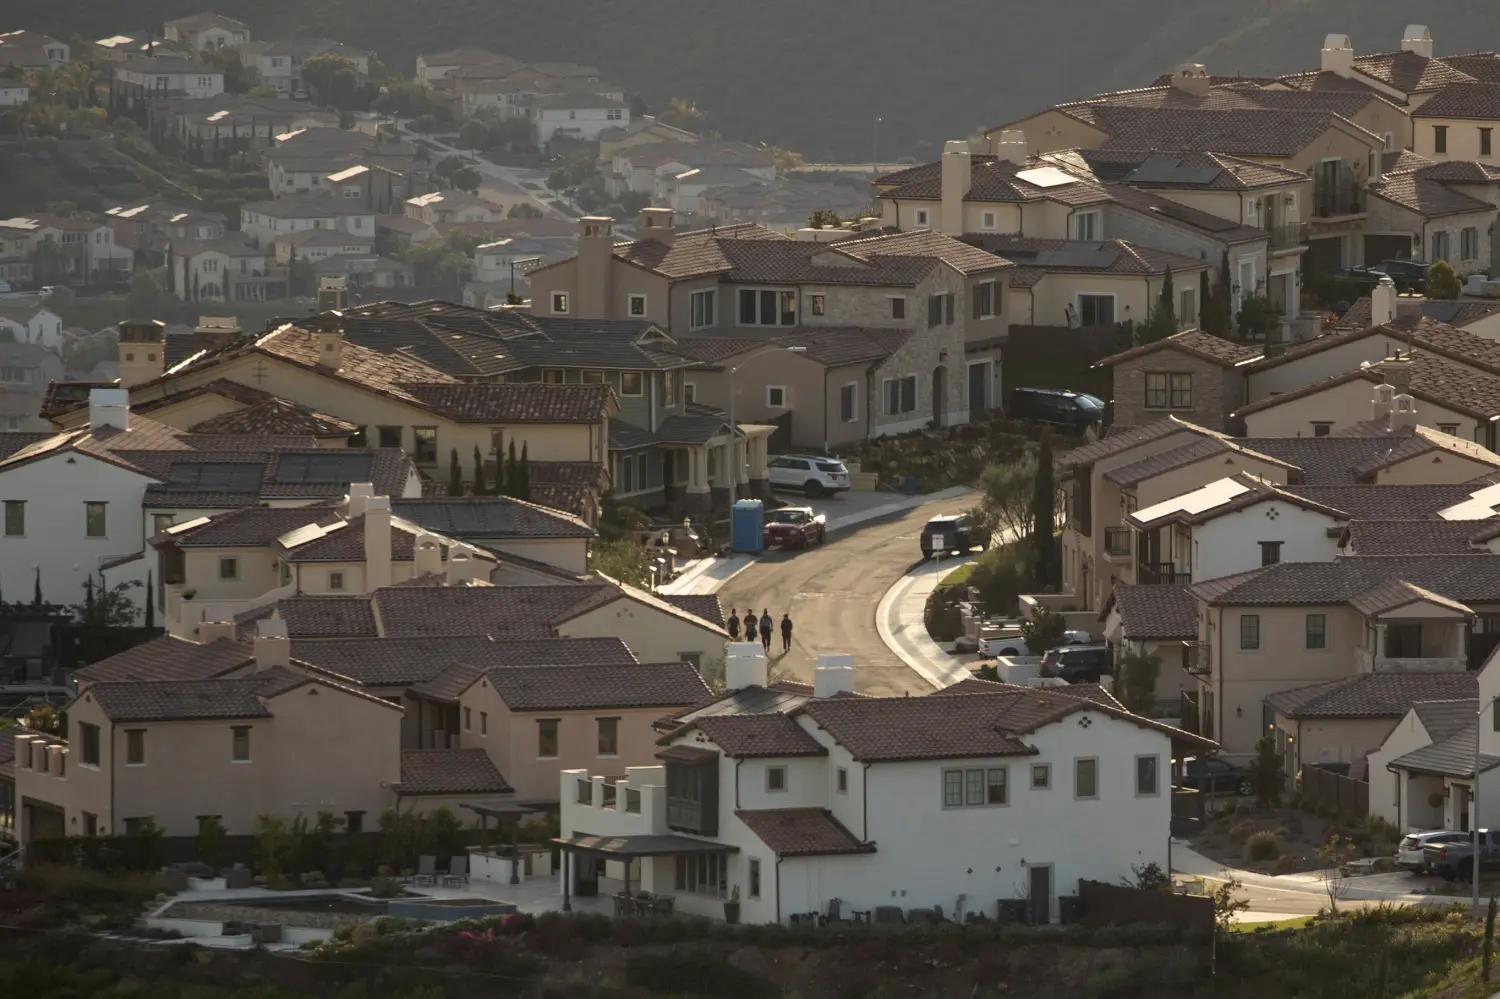 Homes in San Marcos, California